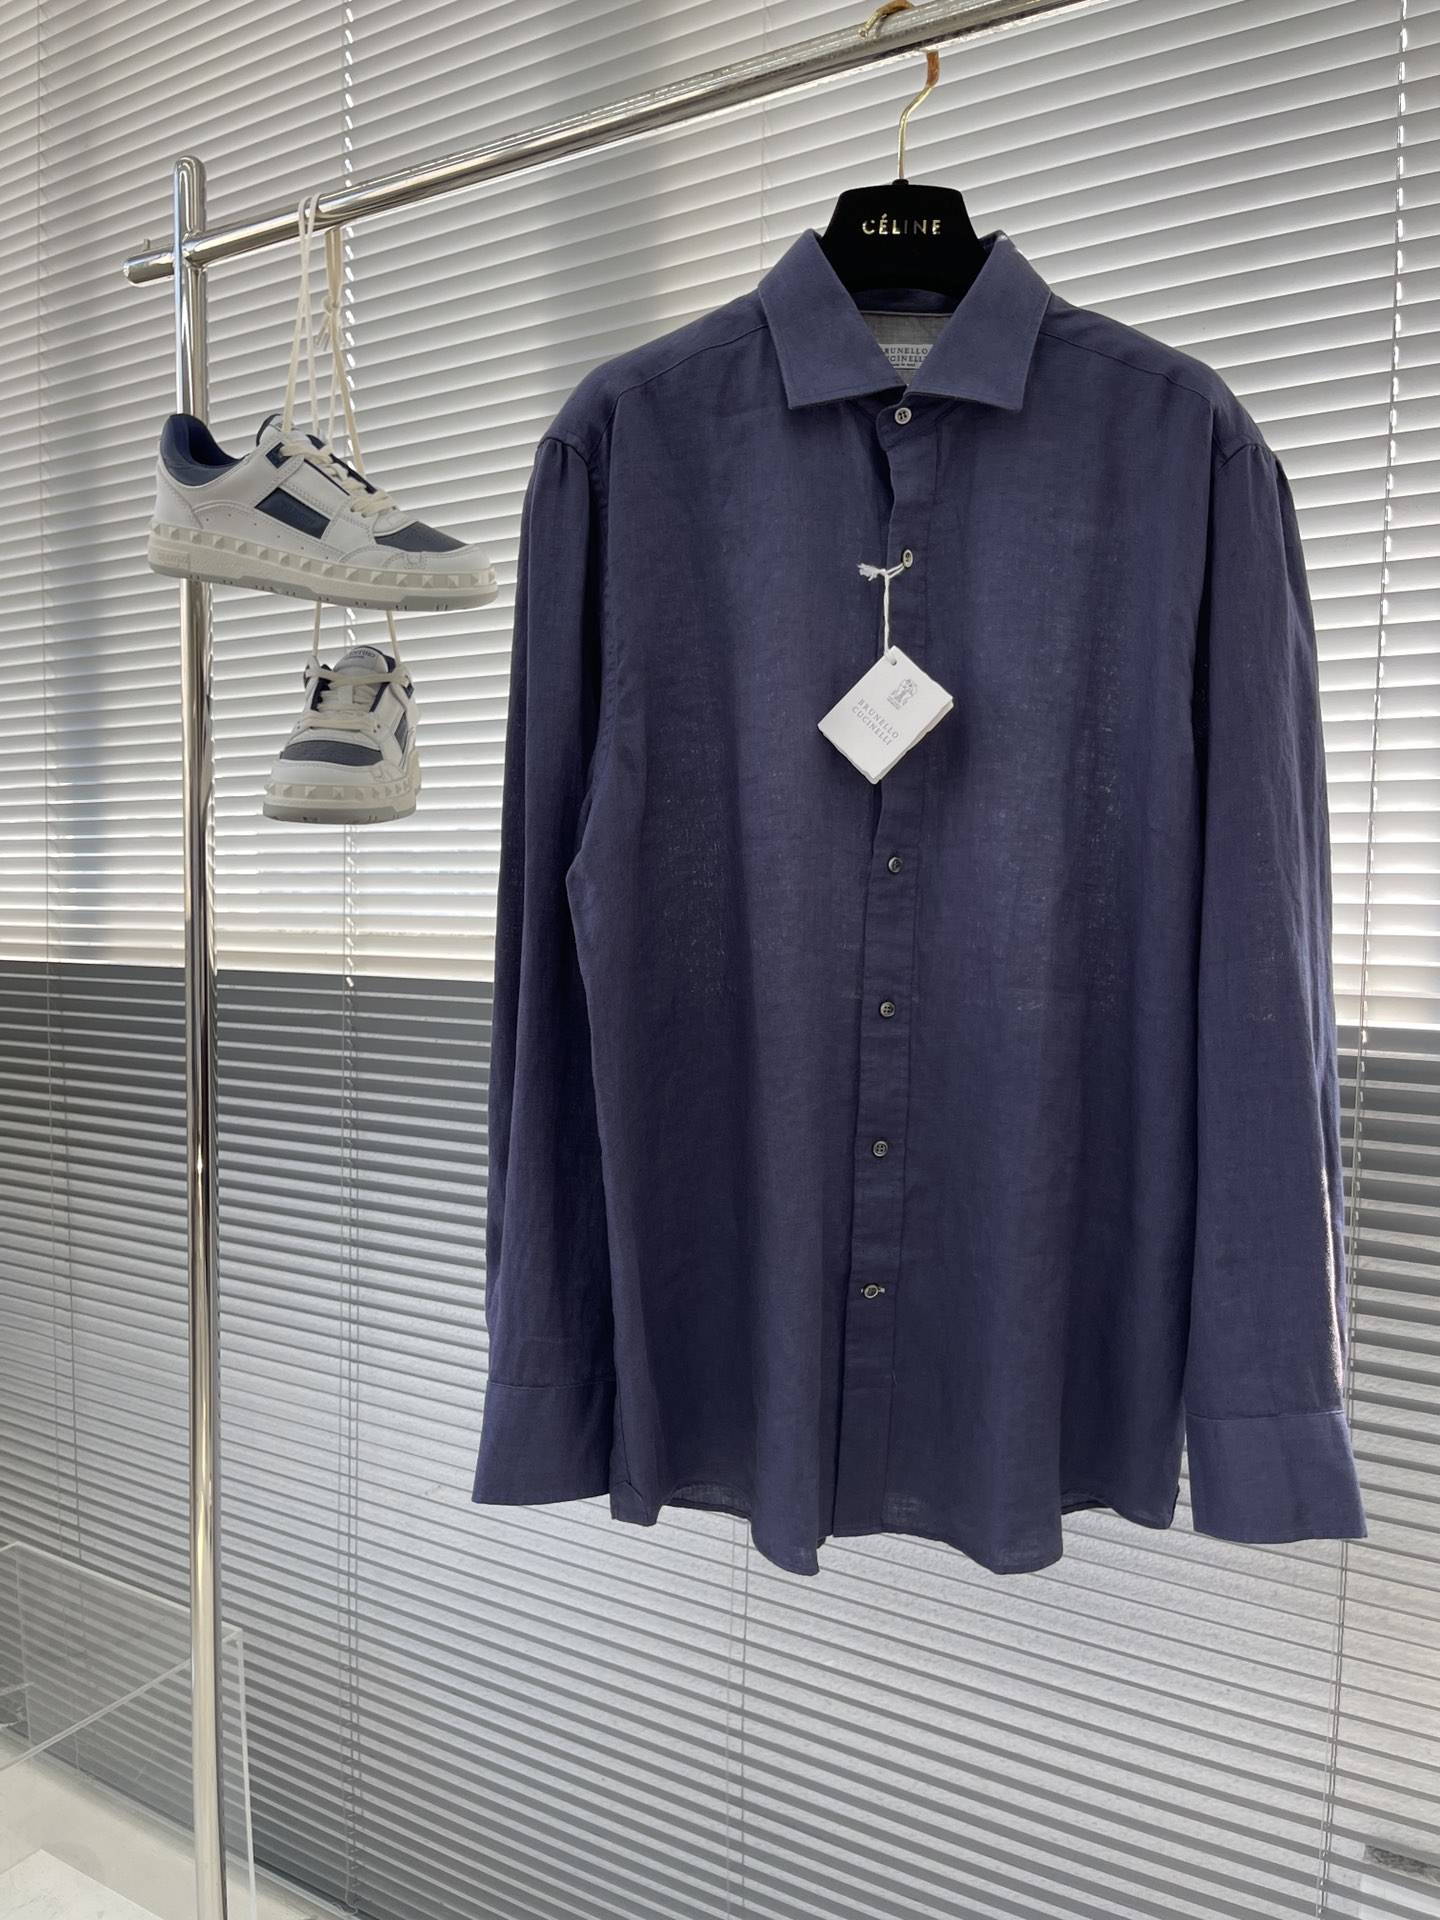 -BC亚麻衬衫是一款采用高质量亚麻材质制作的衬衫具有轻盈透气和舒适的特点其设计简洁大方适合各种场合穿着衬